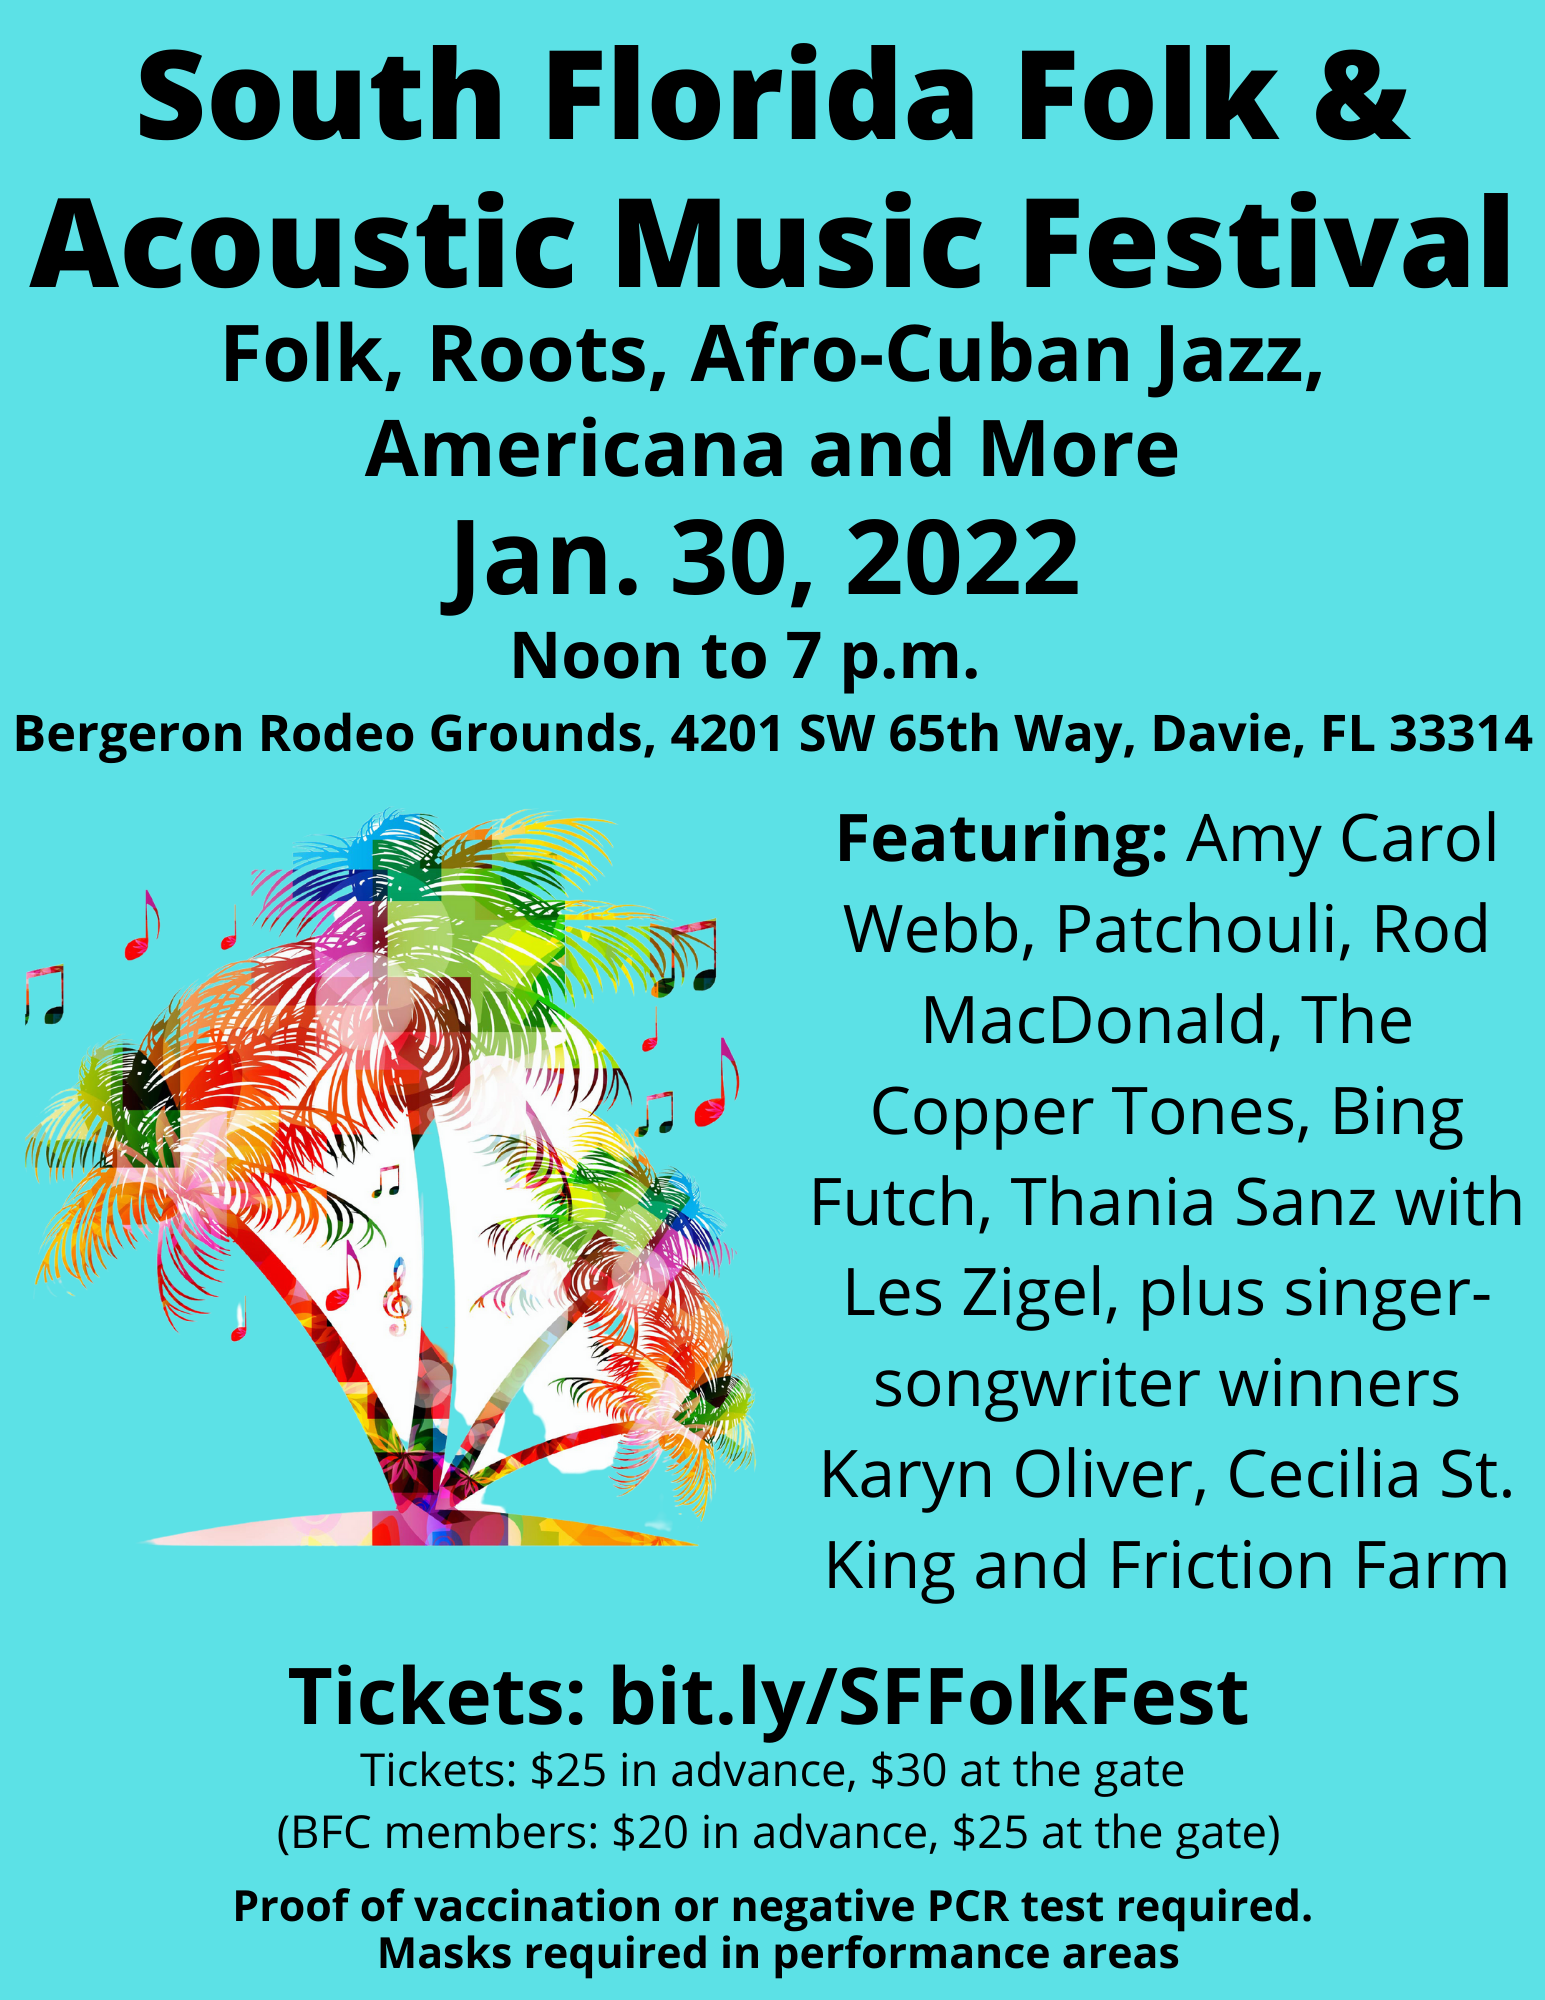 South Florida Folk & Acoustic Music Festival 1/30/22 The Soul Of Miami